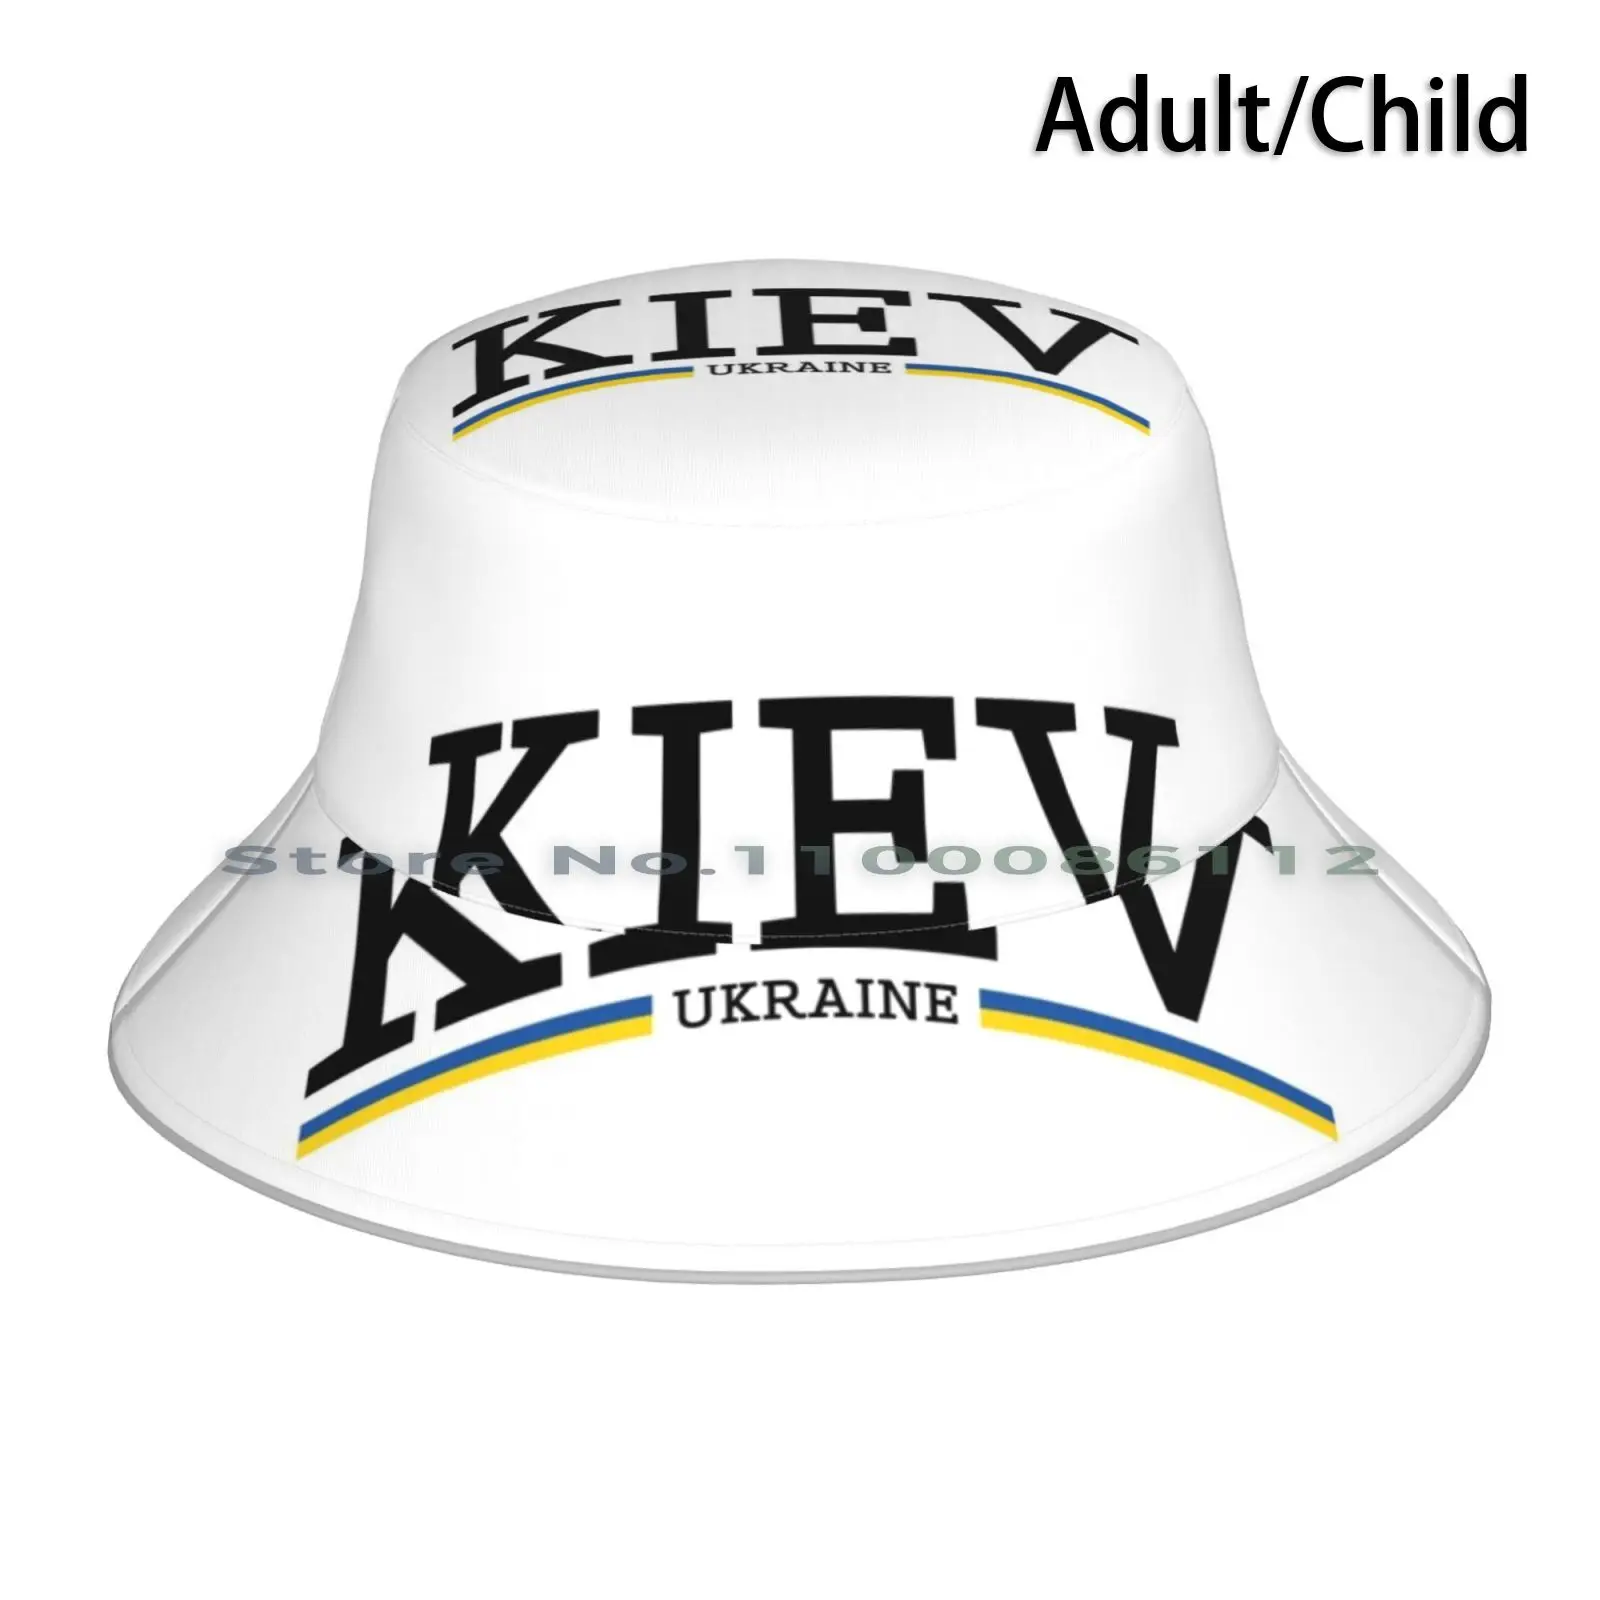 

Kiev Ukraine Bucket Hat Sun Cap Kiev Ukraine Dnieper River Country Flag City Capital Europe Ukrayina Cis Kyyiv Odessa Danube